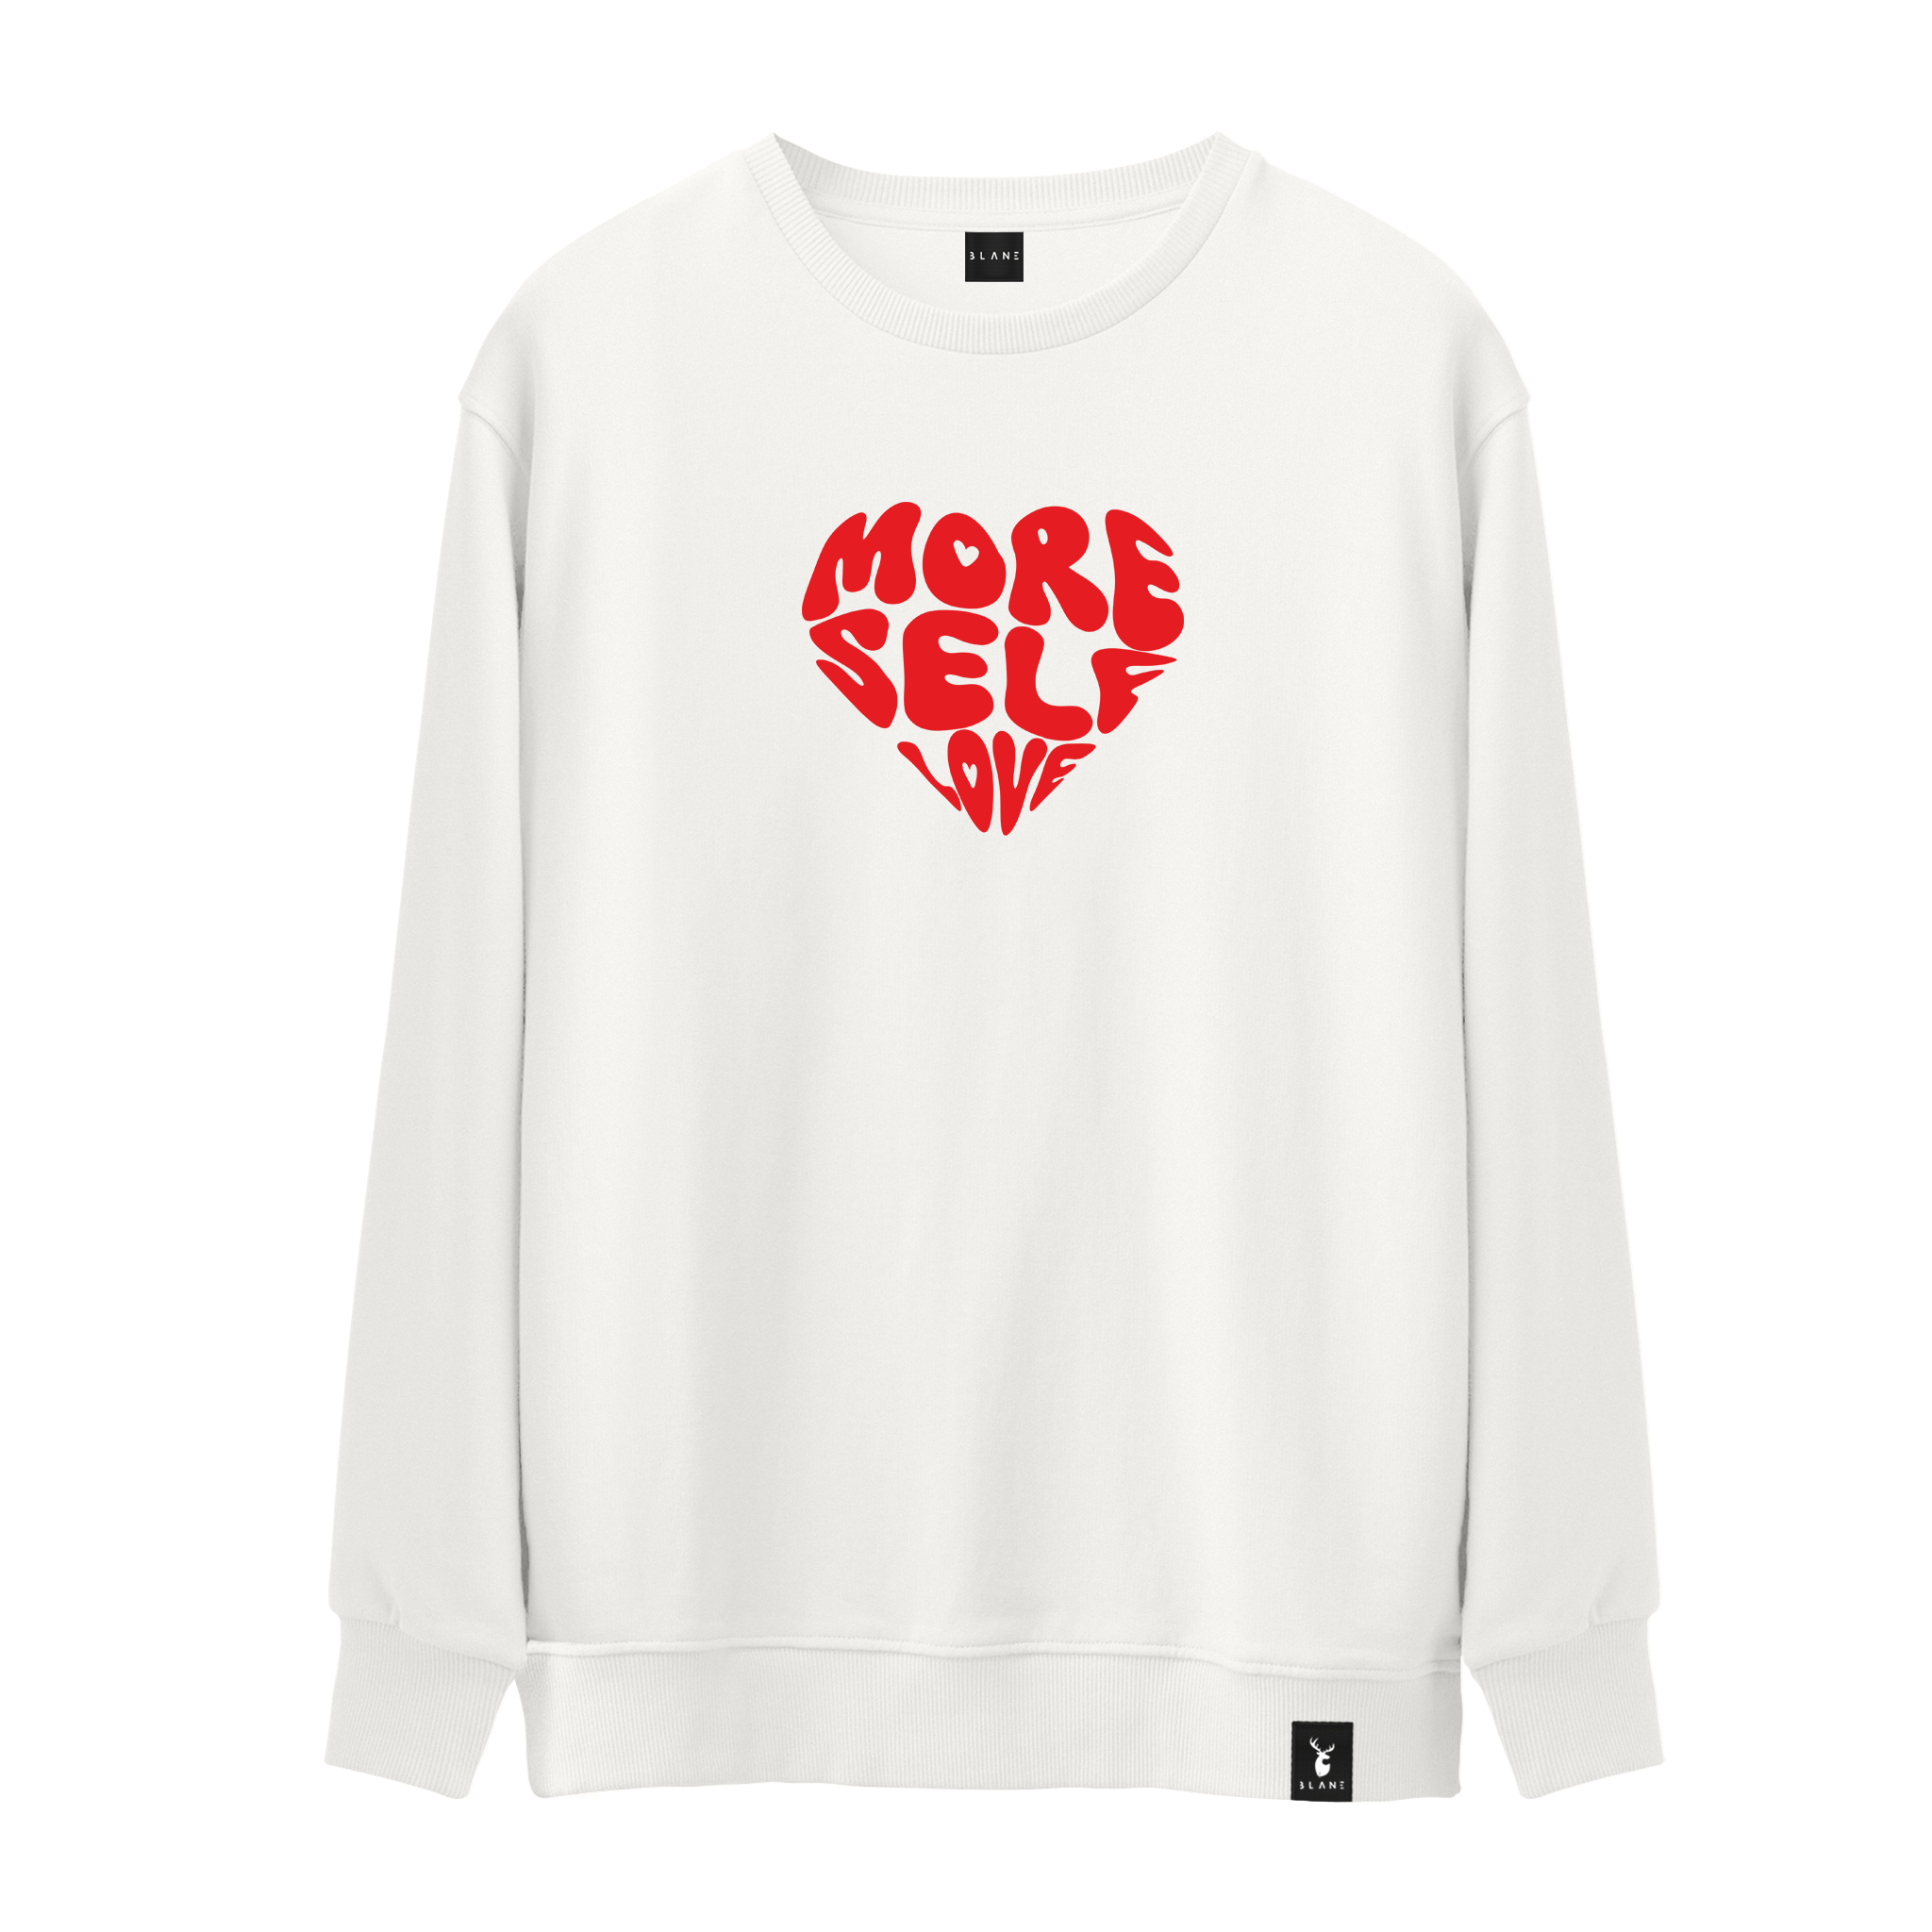 More Self Love - Sweatshirt